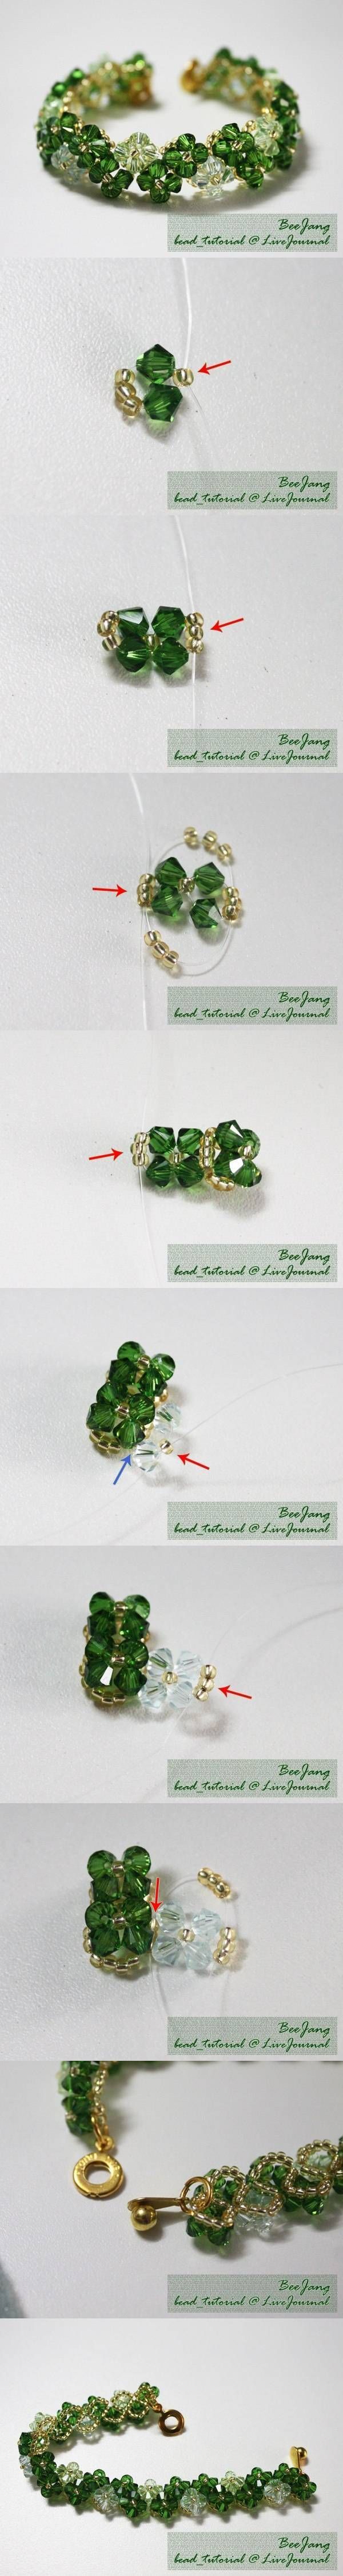 DIY Transparent Beads Bracelet